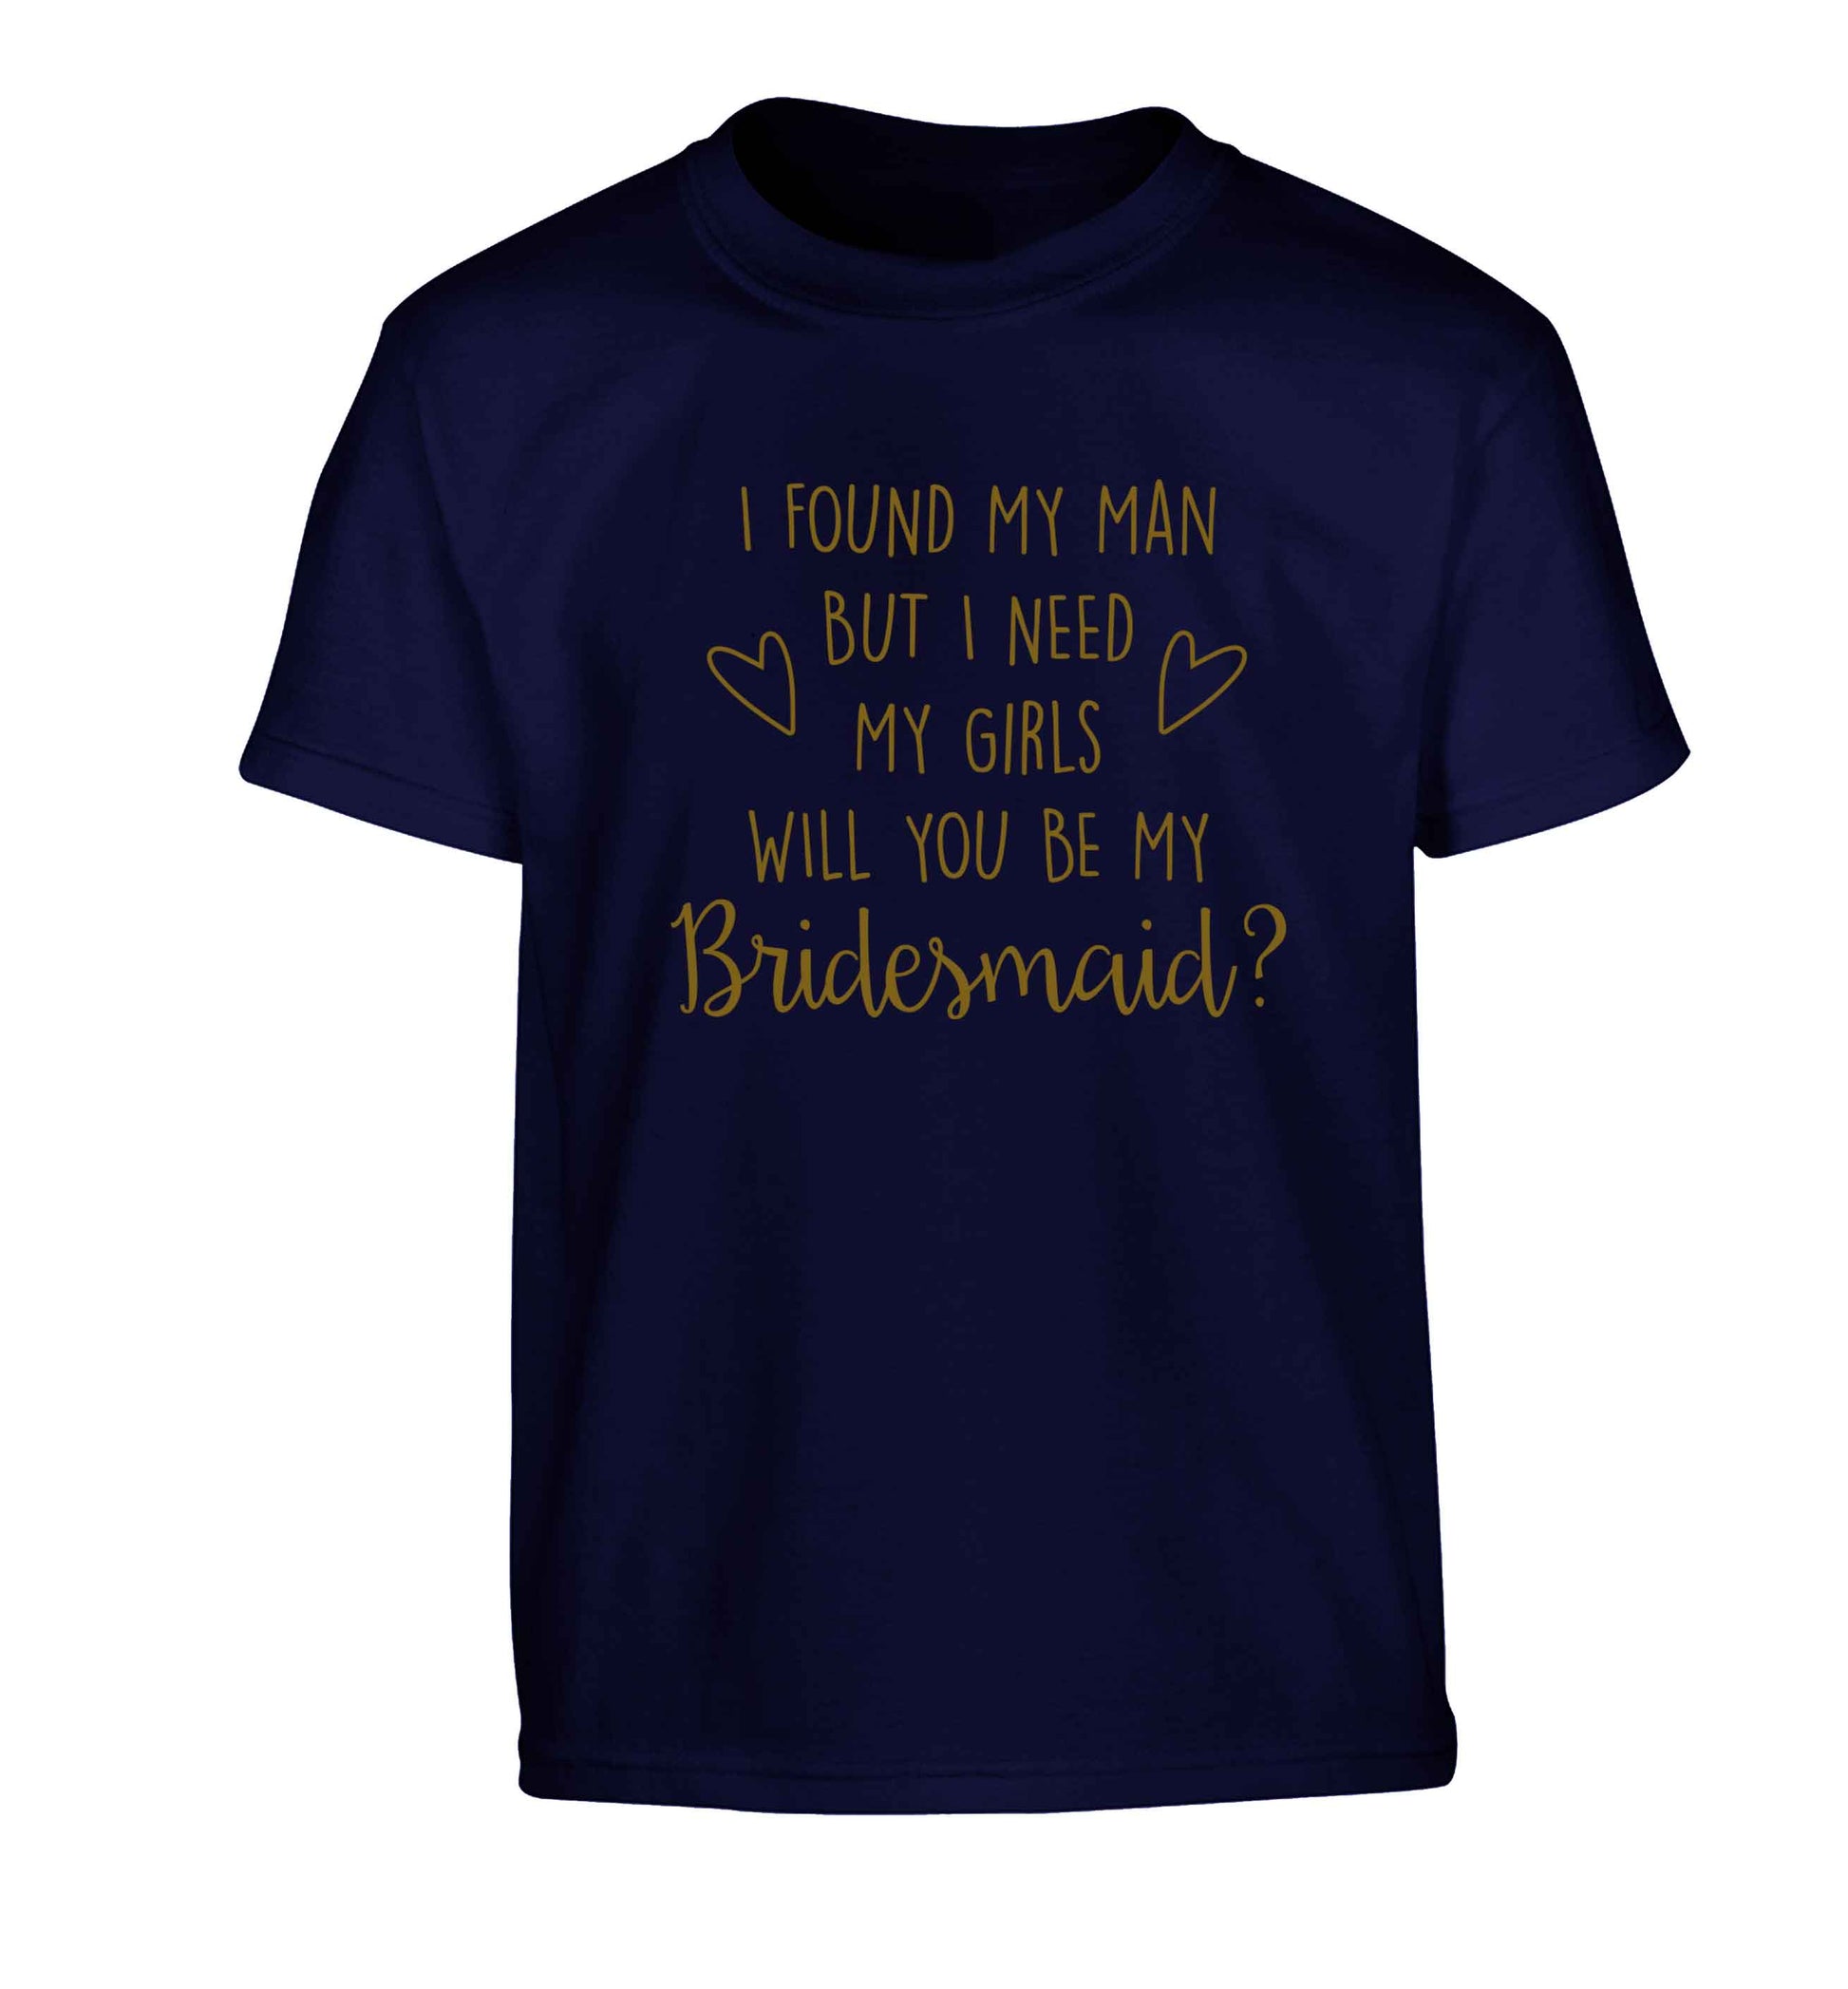 I found my man but I need my girls will you be my bridesmaid? Children's navy Tshirt 12-13 Years